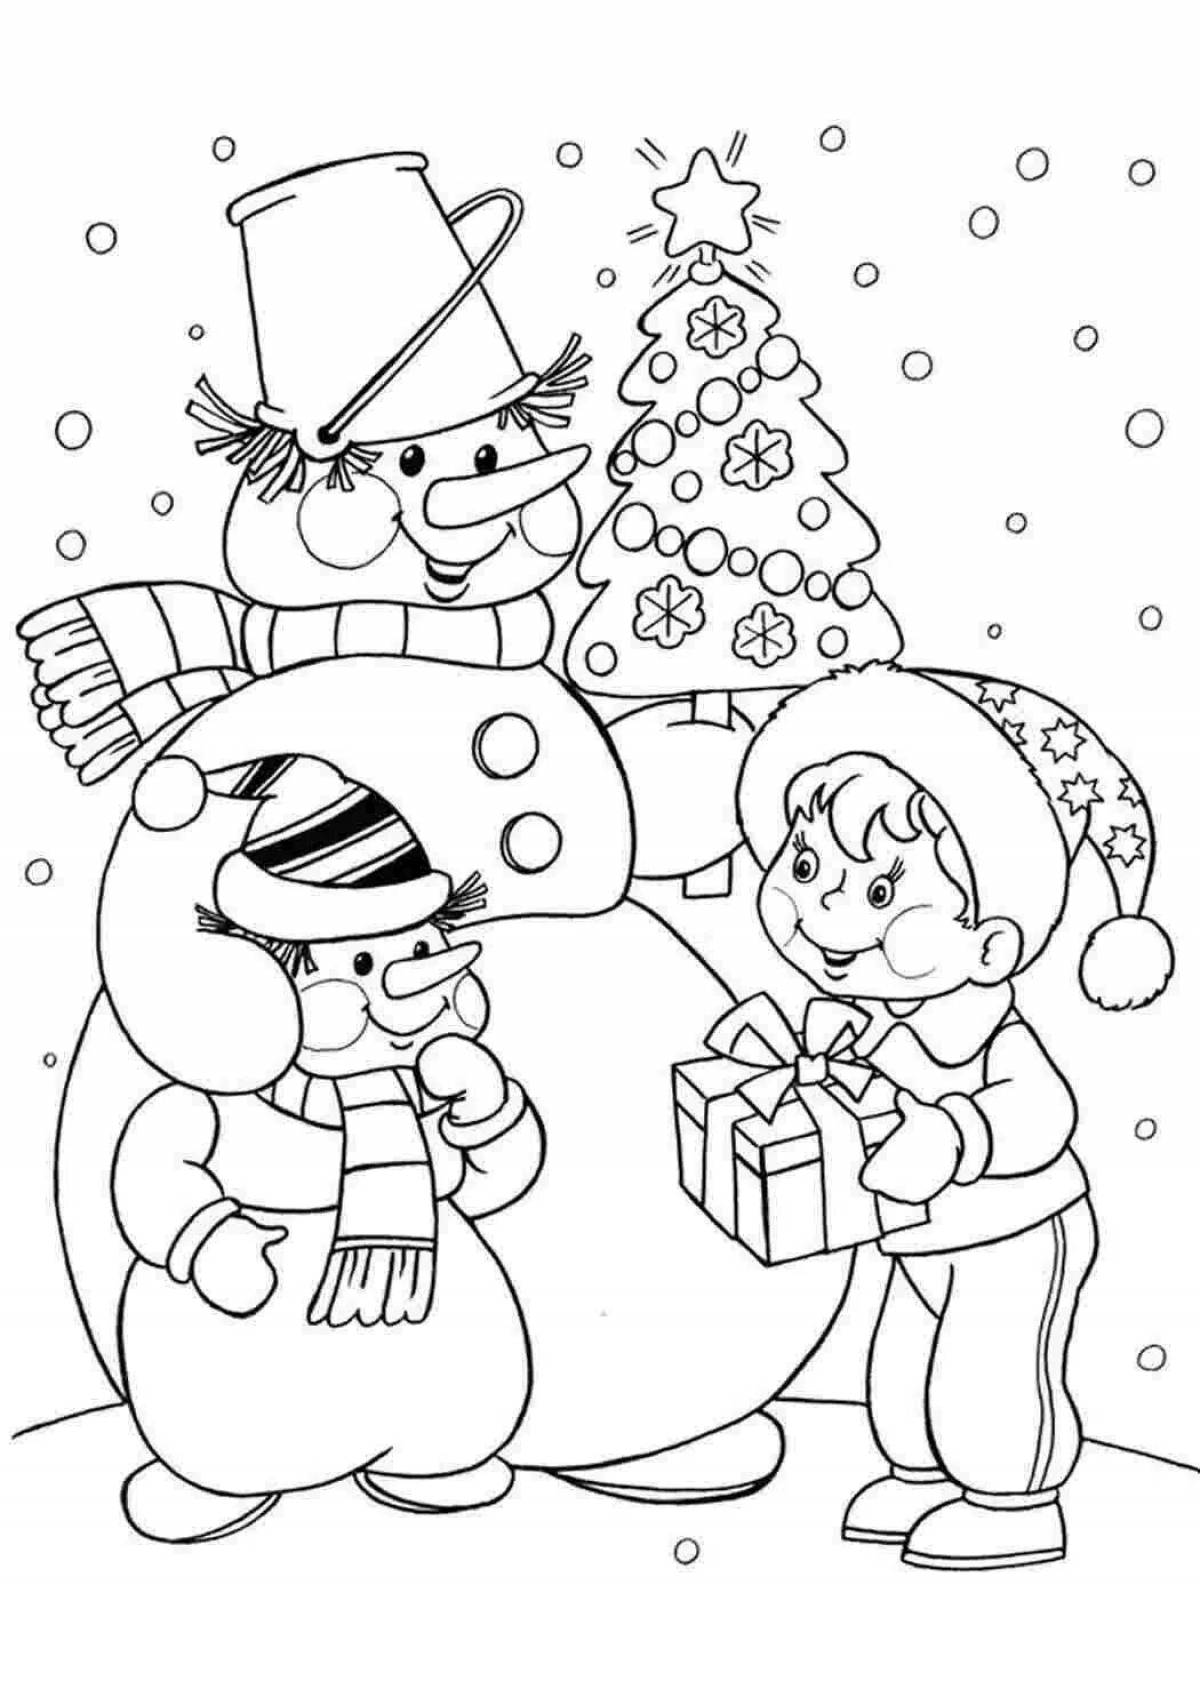 Adorable snowman school coloring book